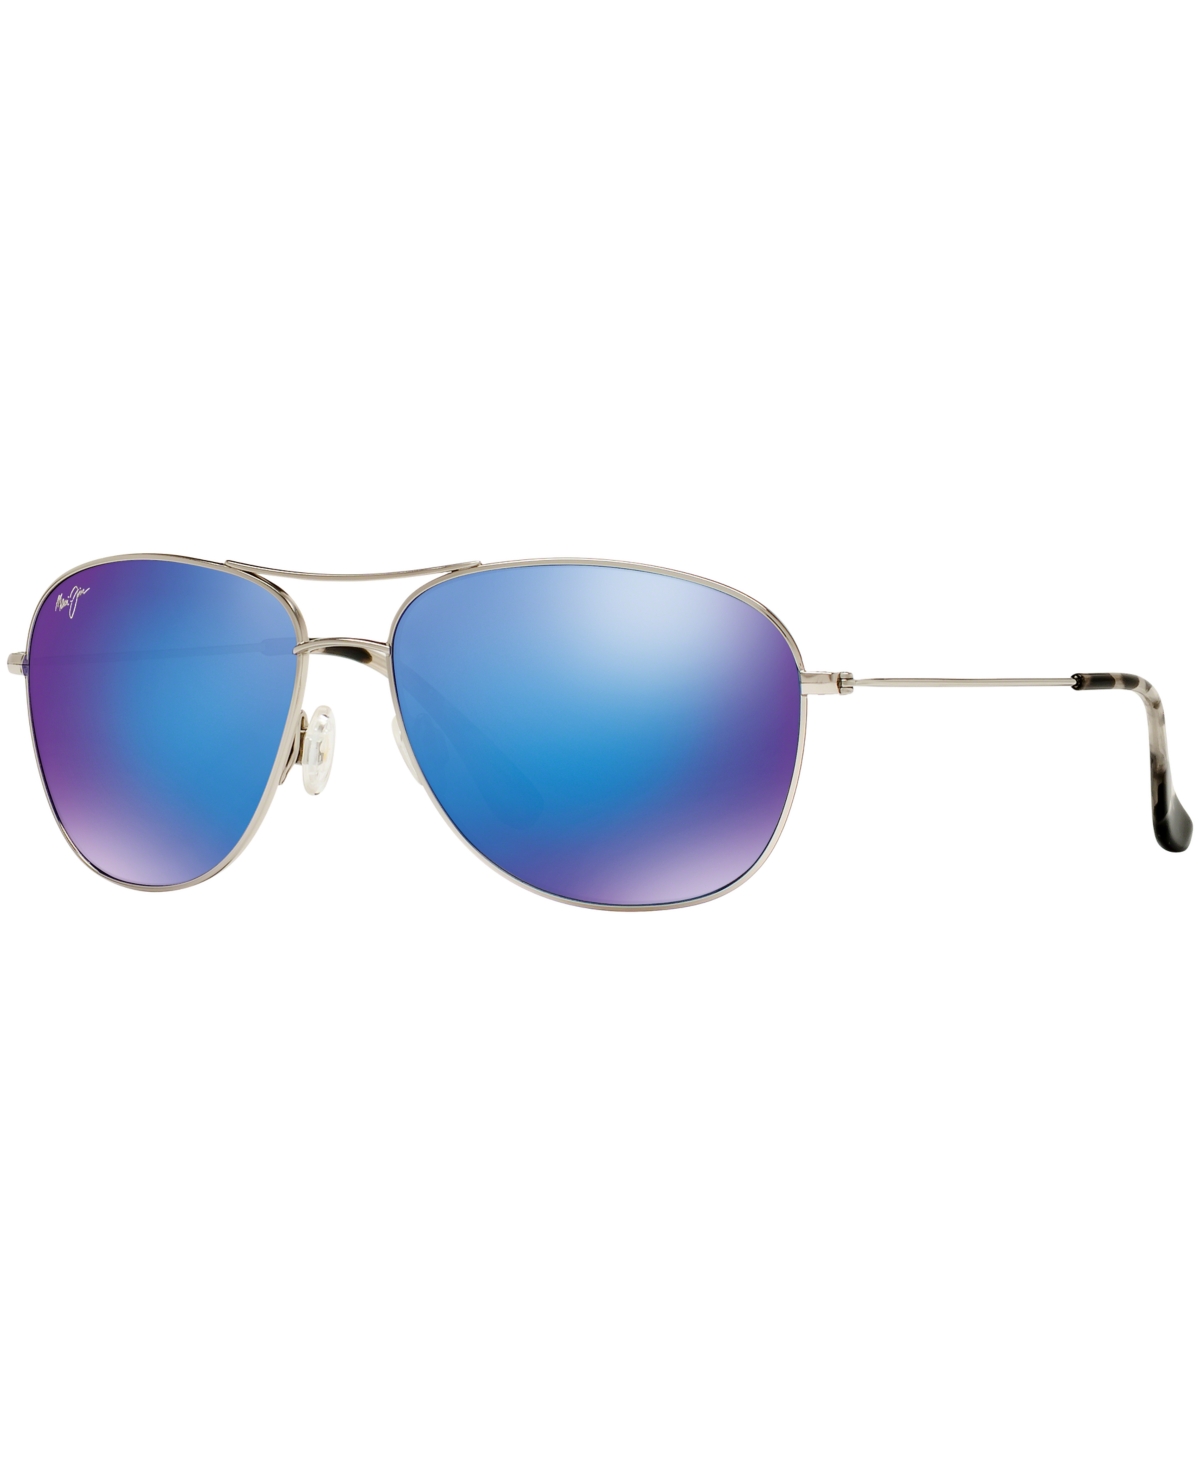 Polarized Cliffhouse Sunglasses , 247 - SILVER SHINY/BLUE MIRROR POLAR